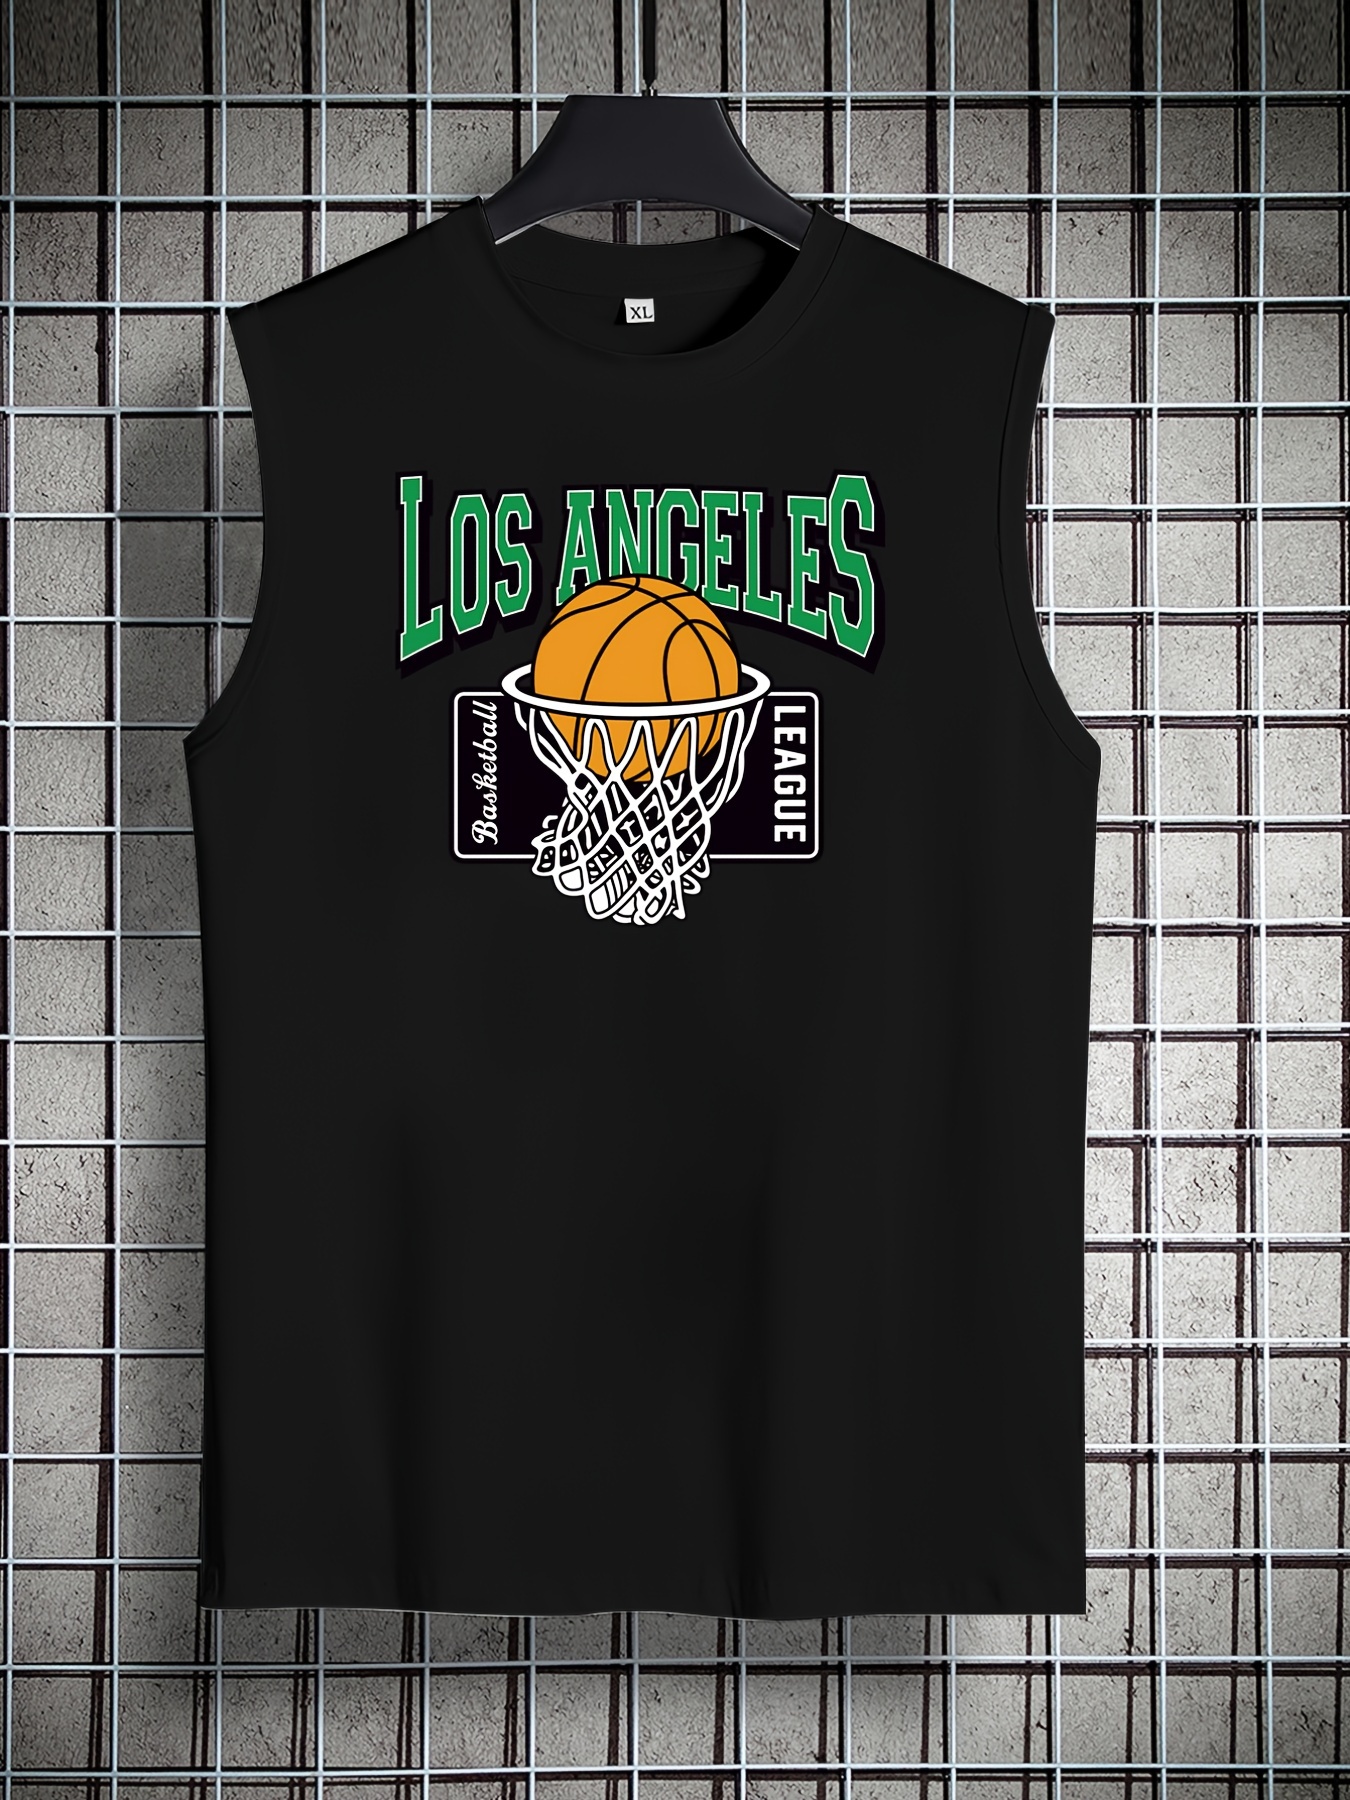 Los Angeles Lakers Shirt Mens XL Black Activewear Gym Workout Basketball